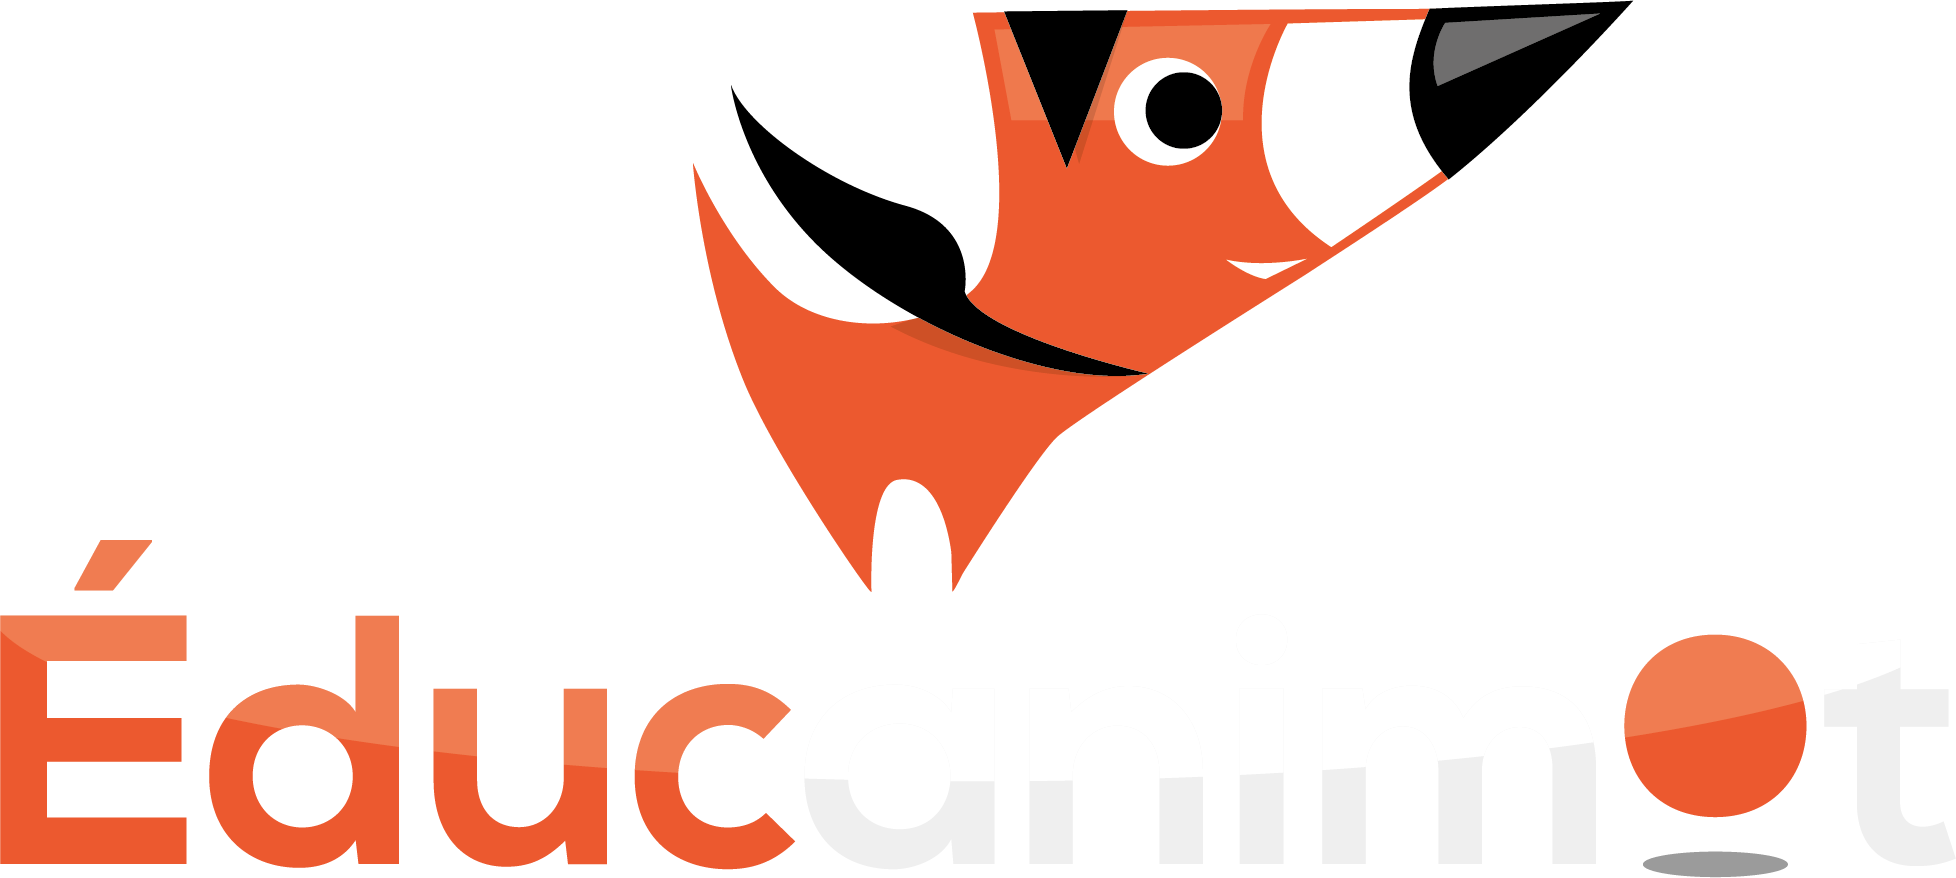 Educanimot Logo